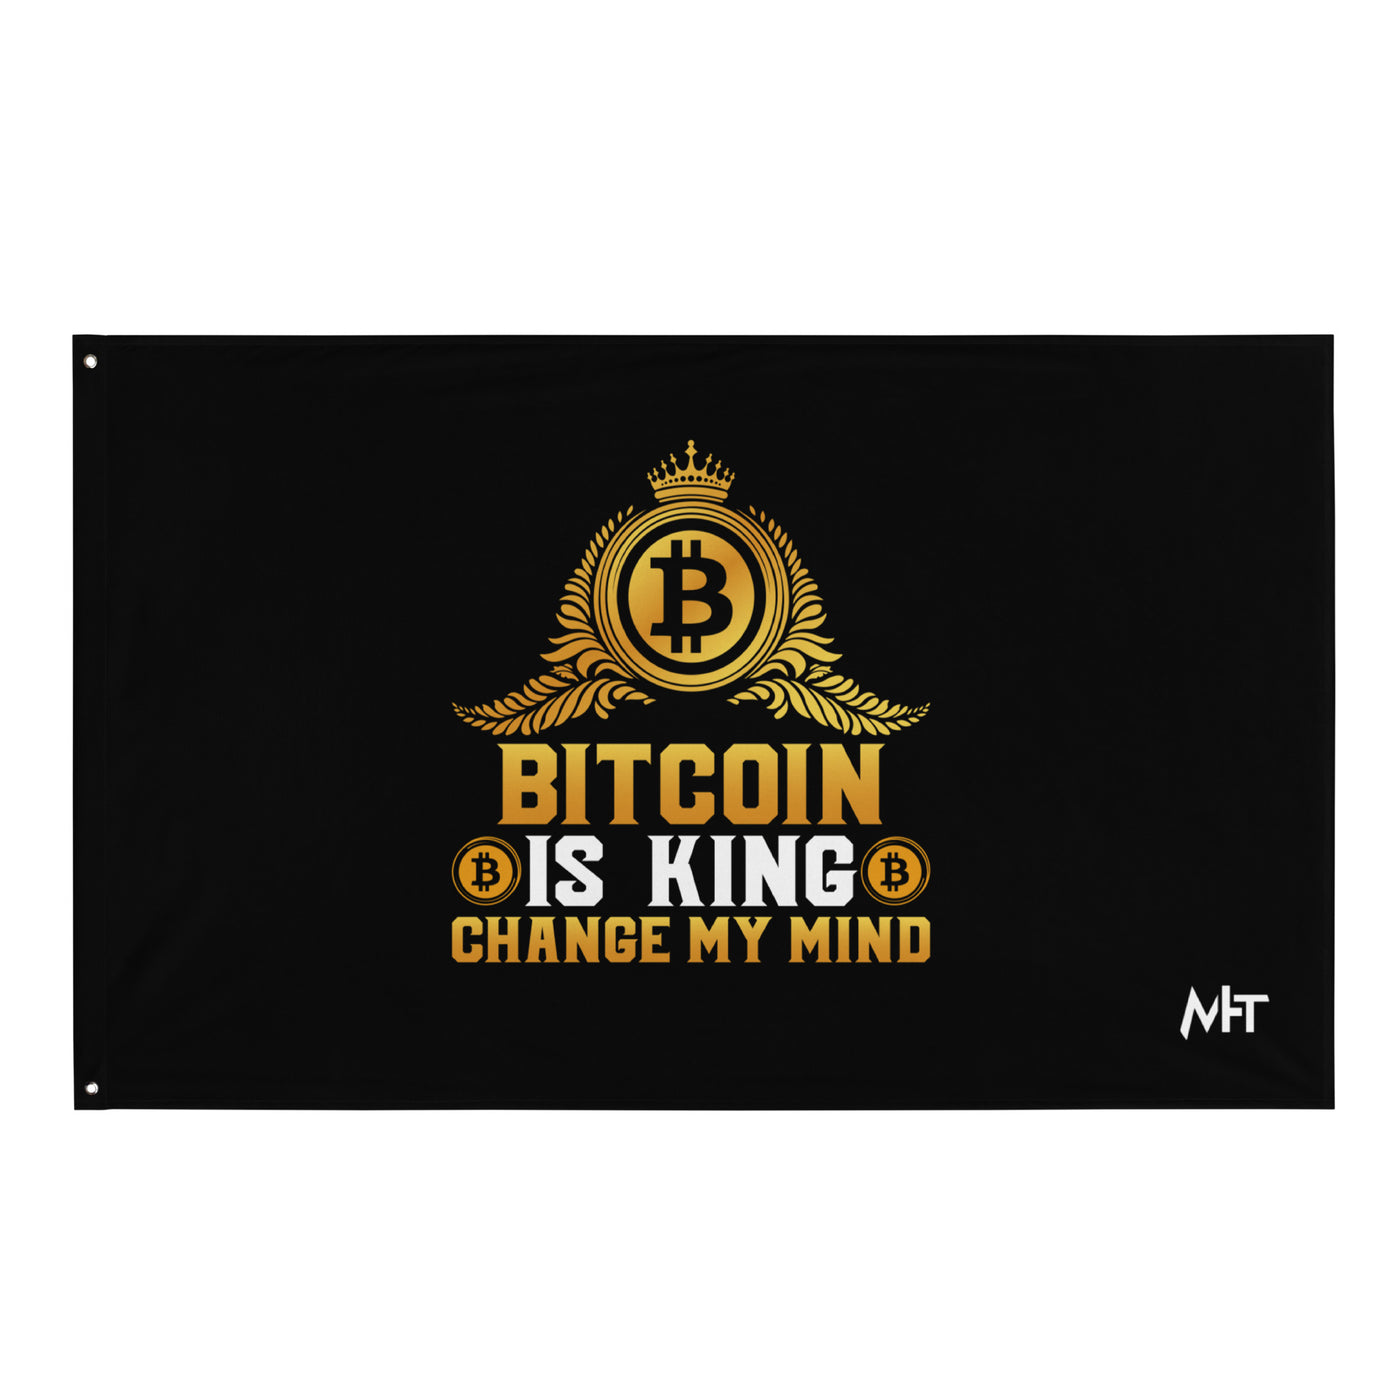 Bitcoin is King: Change my Mind - Flag